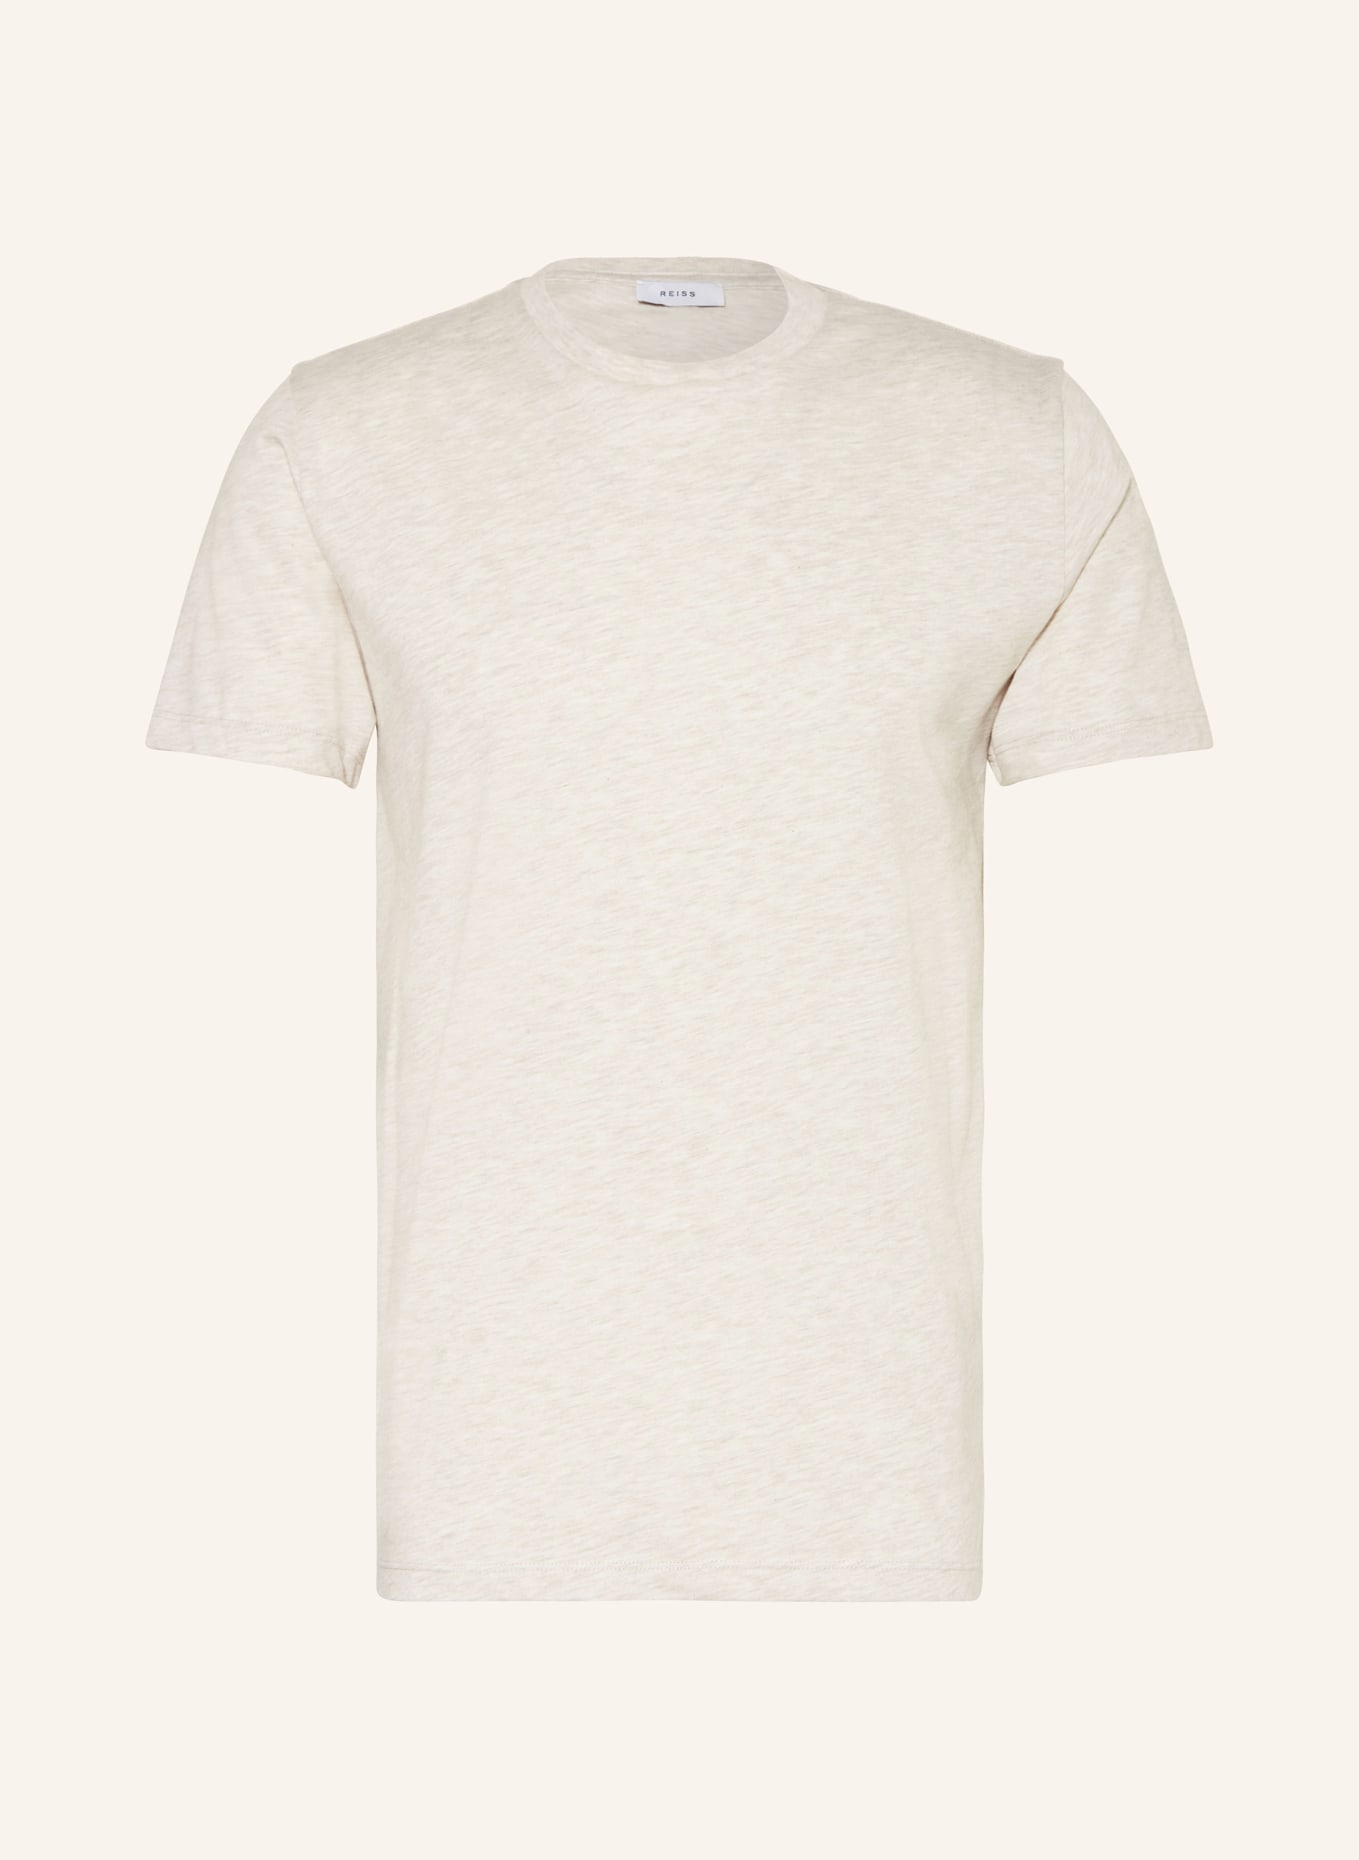 REISS T-Shirt BLESS, Farbe: CREME (Bild 1)